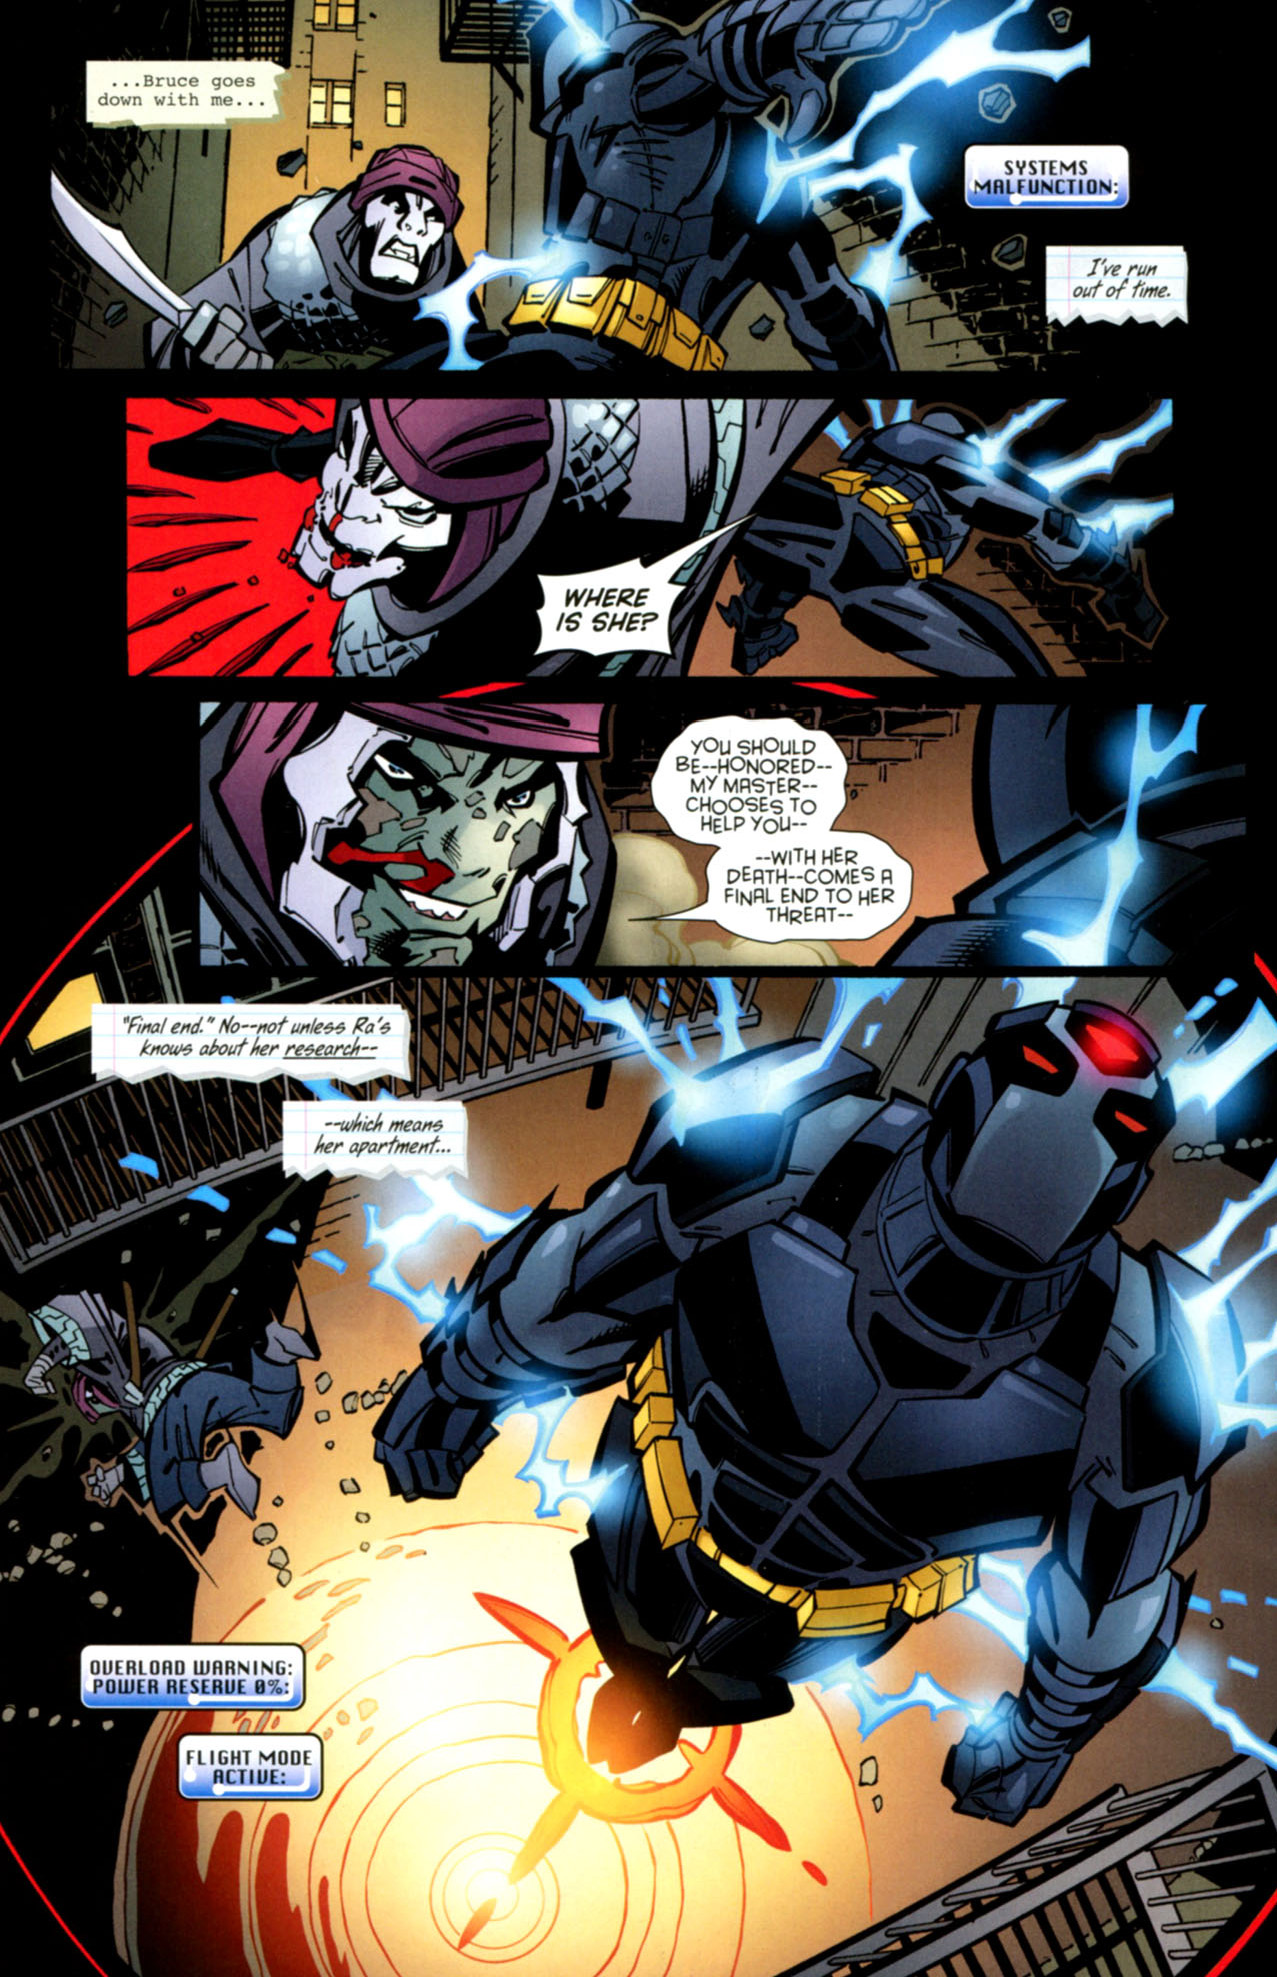 Batman (Insider Suit) Feats | VS Battles Wiki Forum